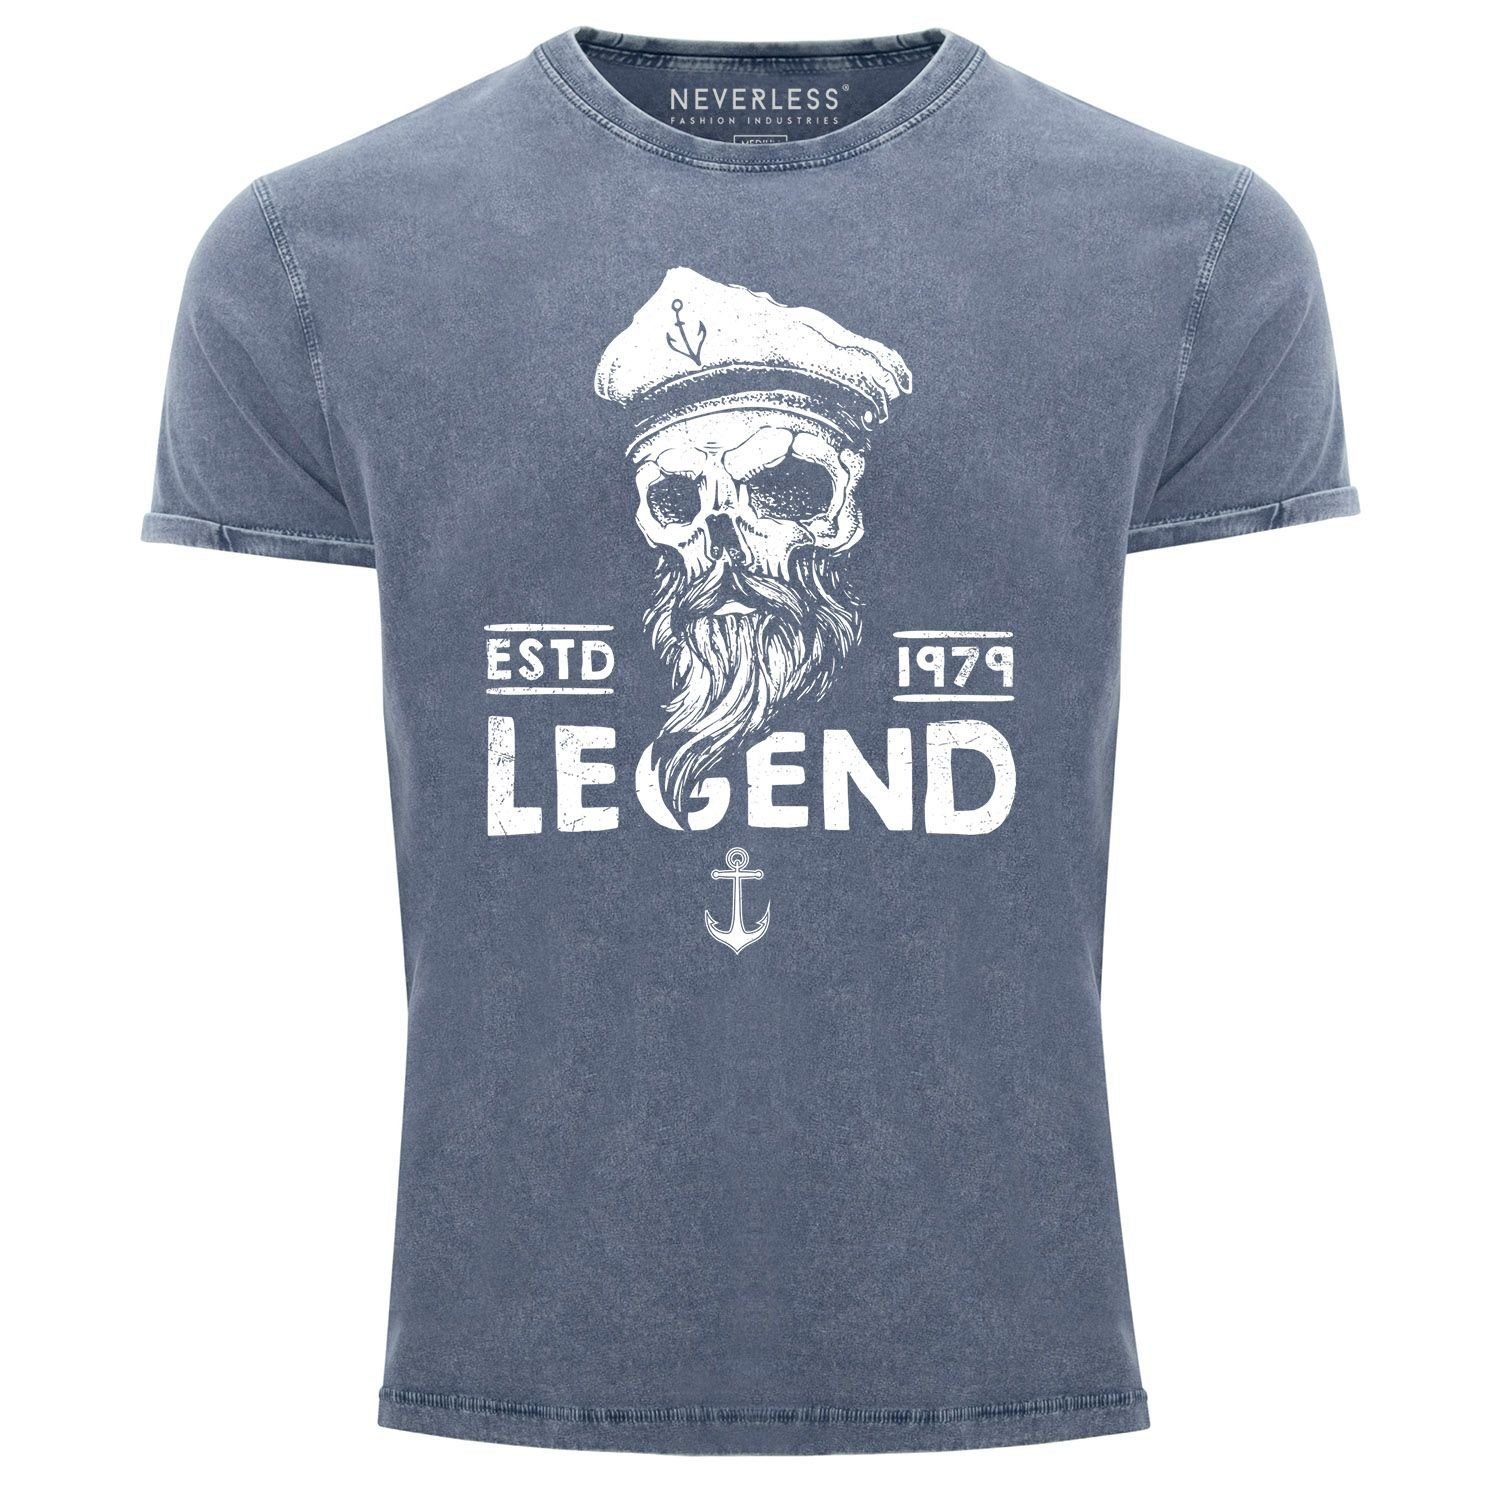 Neverless Print-Shirt Cooles Angesagtes Herren T-Shirt Vintage Shirt Totenkopf Legend Captain Aufdruck Used Look Slim Fit Neverless® mit Print blau